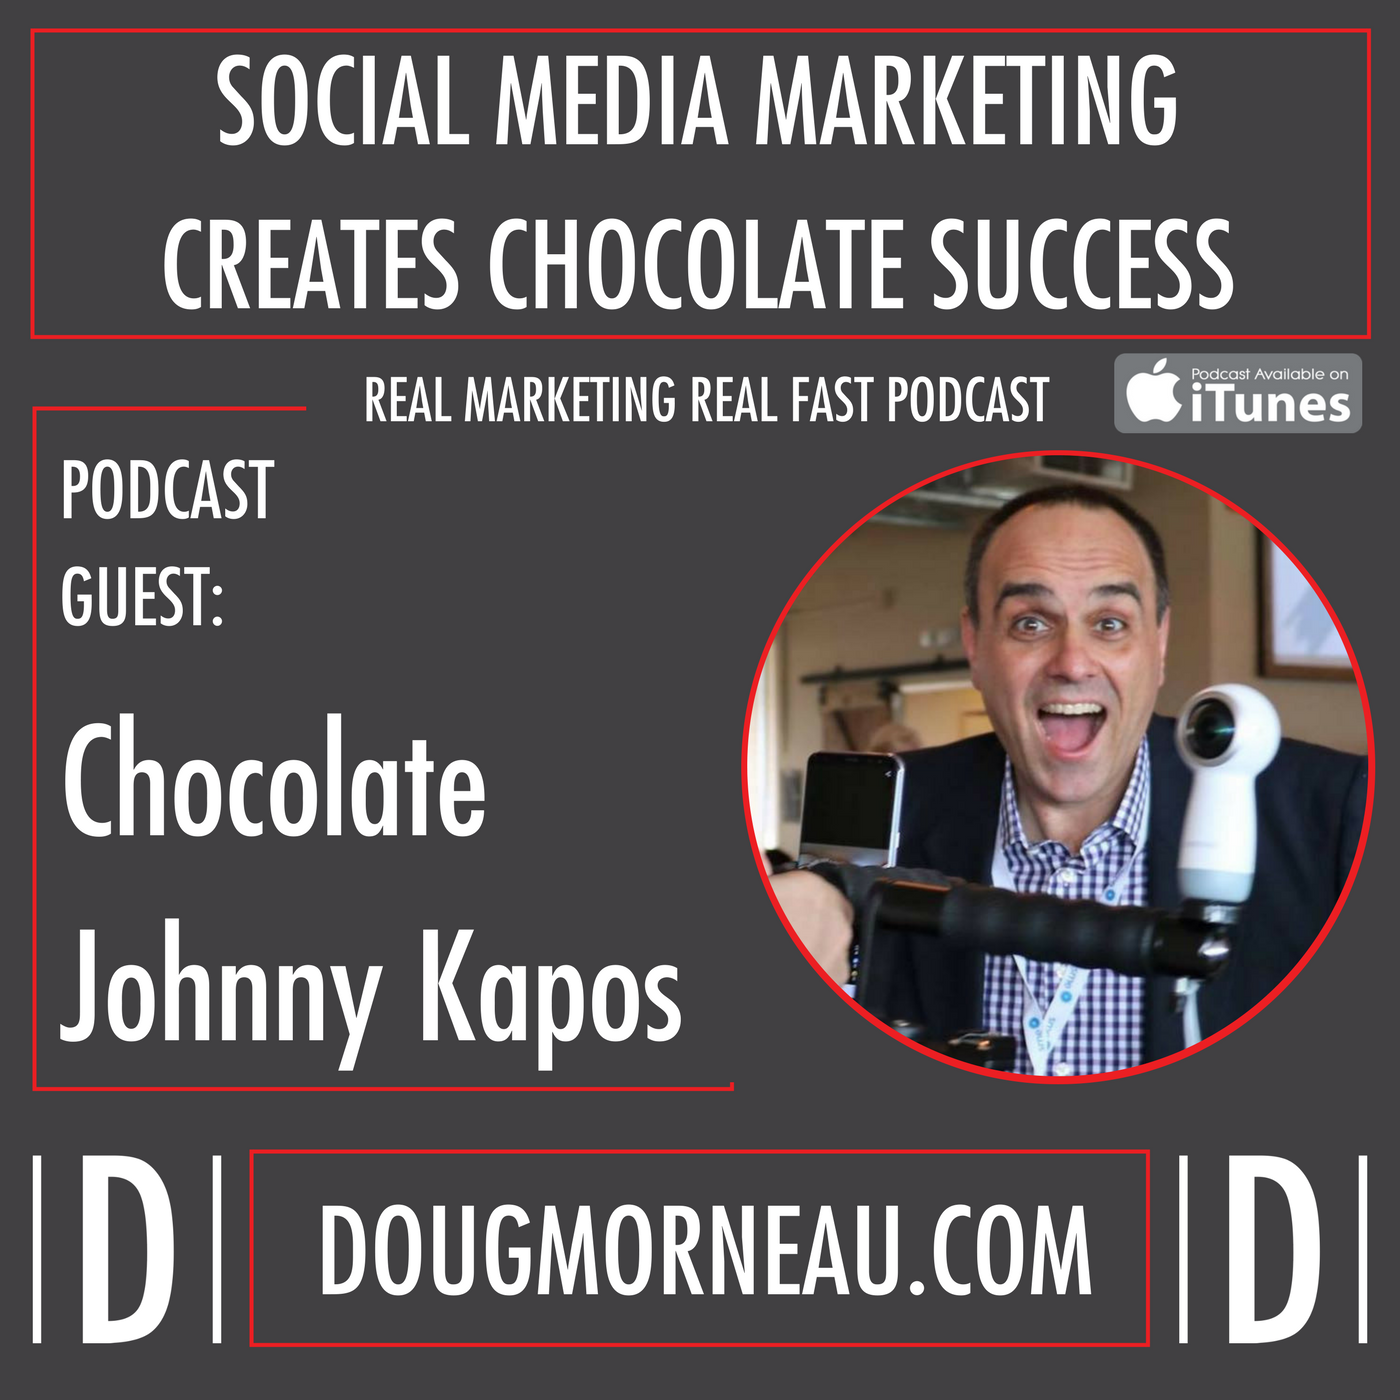 SOCIAL MEDIA MARKETING CREATES CHOCOLATE SUCCESS - DOUG MORNEAU - CHOCOLATE JOHNNY KAPOS - REAL MARKETING REAL FAST PODCAST